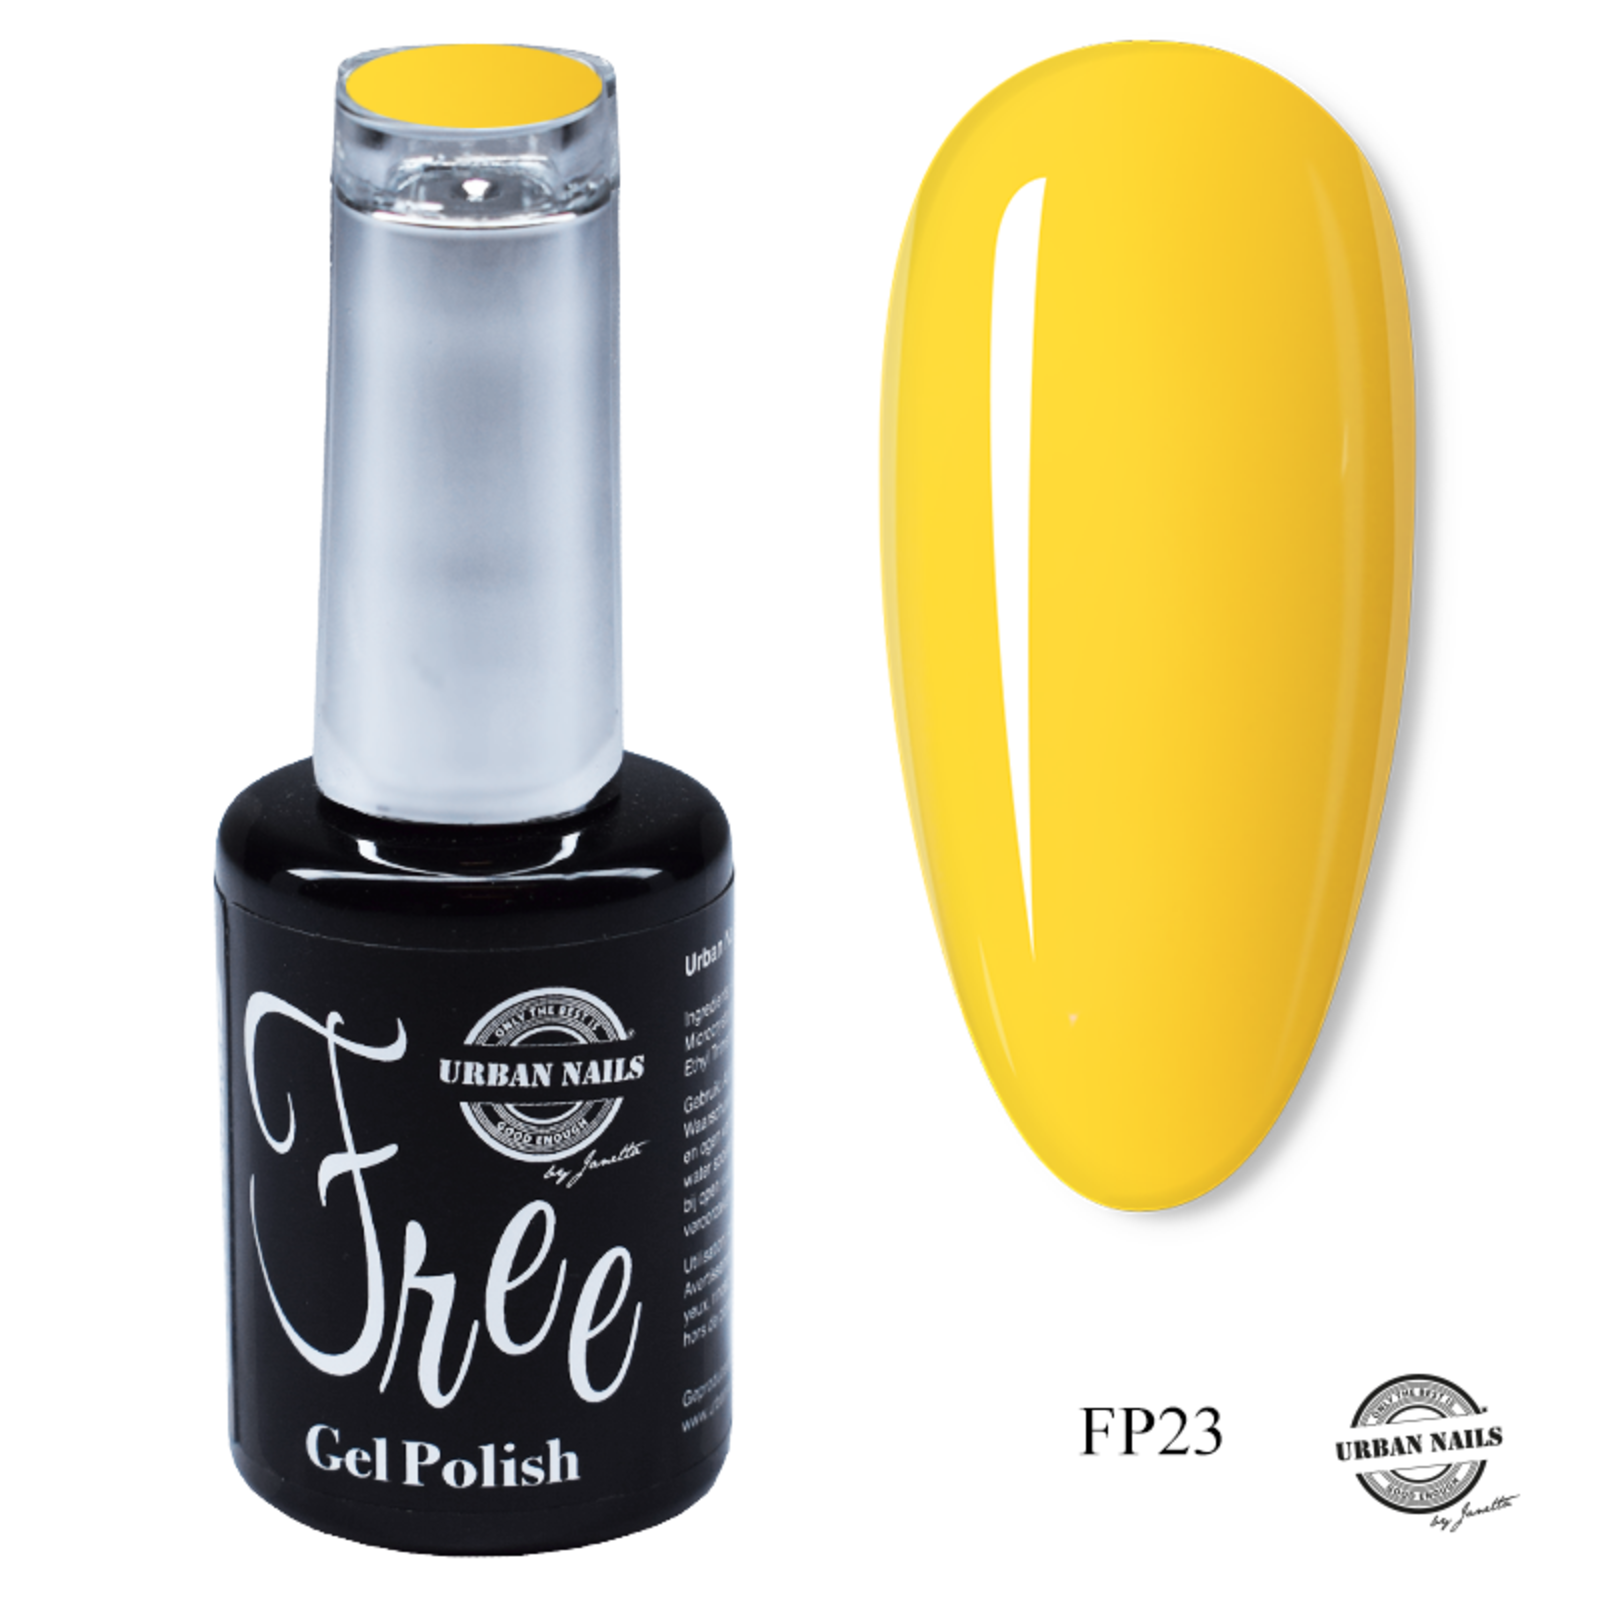 Urban nails Free Gelpolish FP23